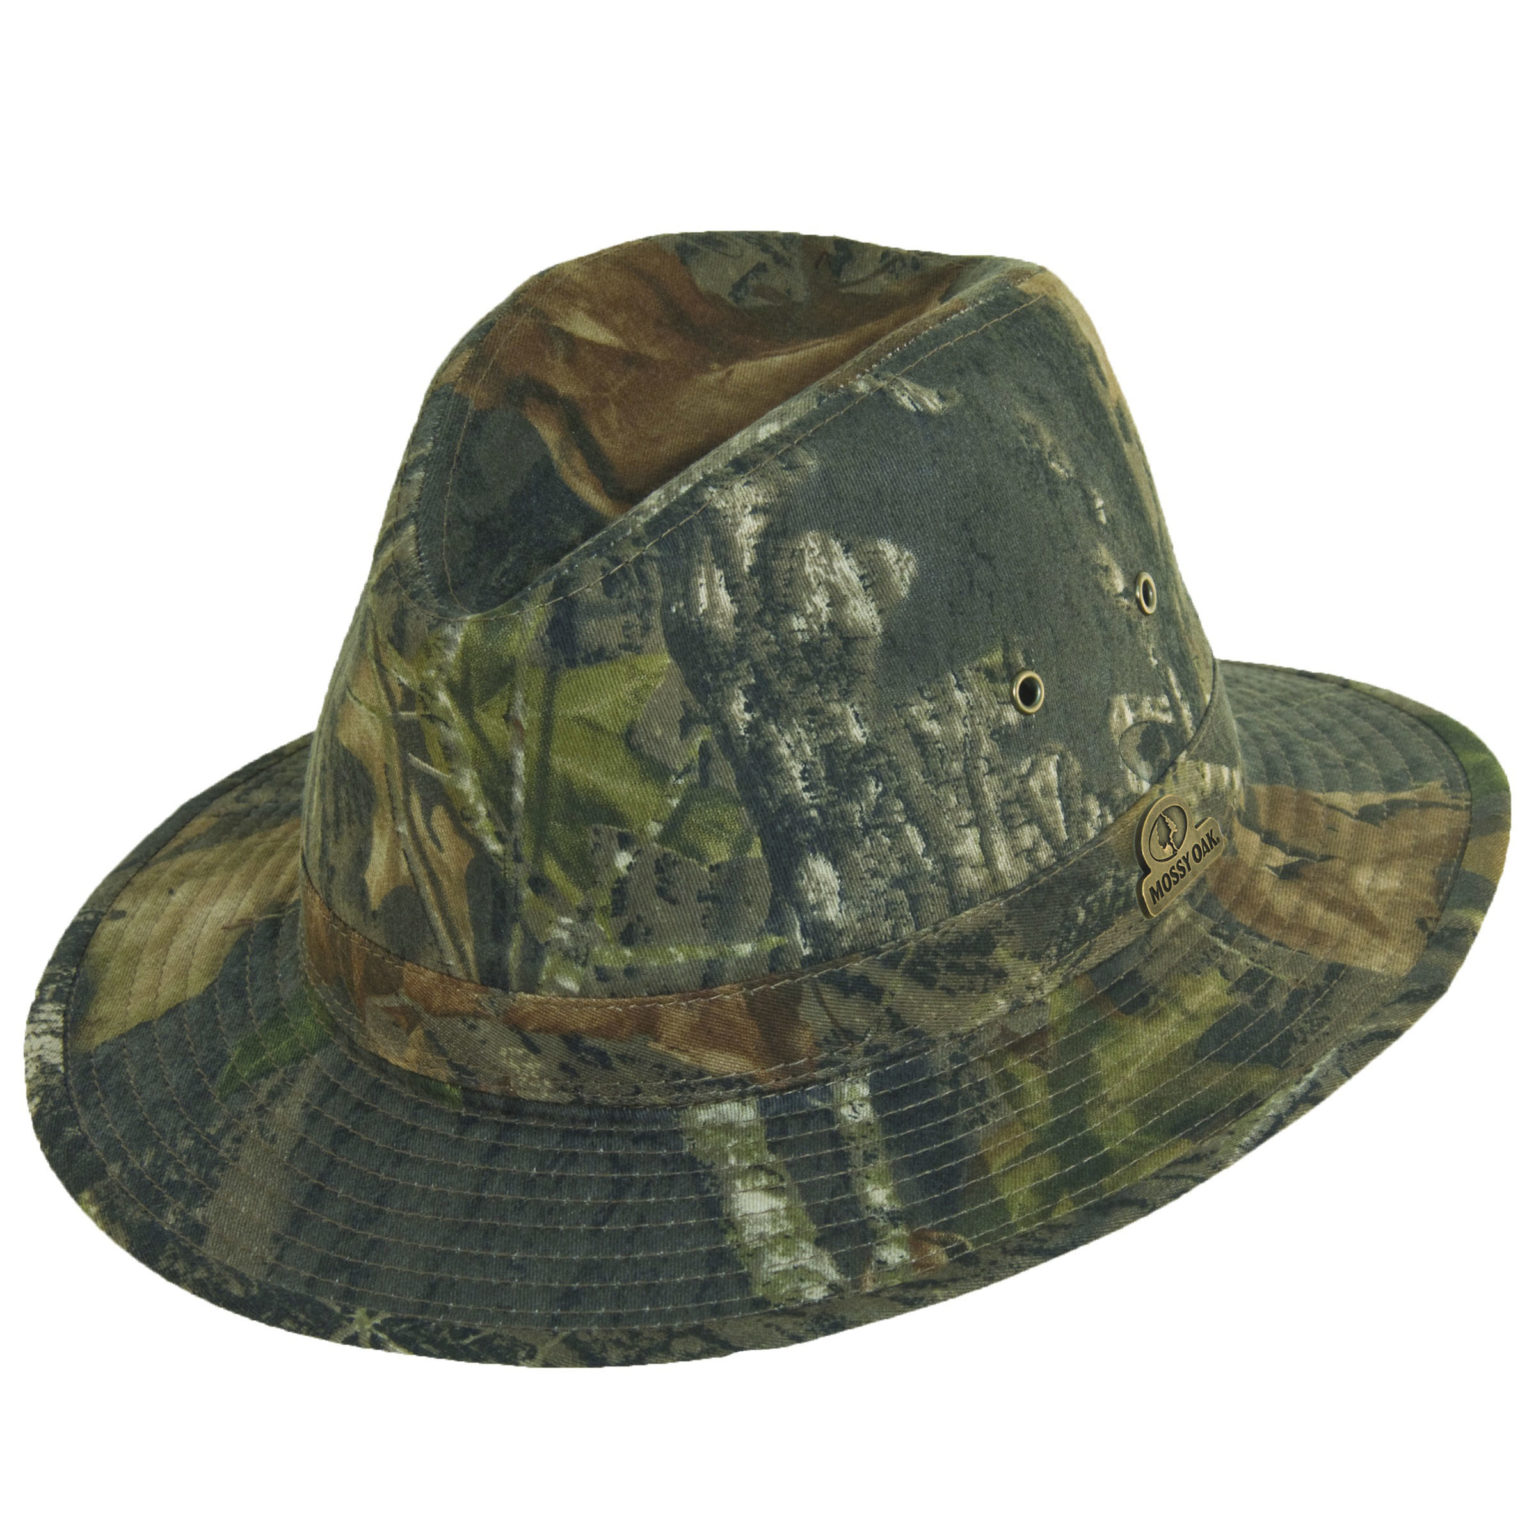 nice safari hat